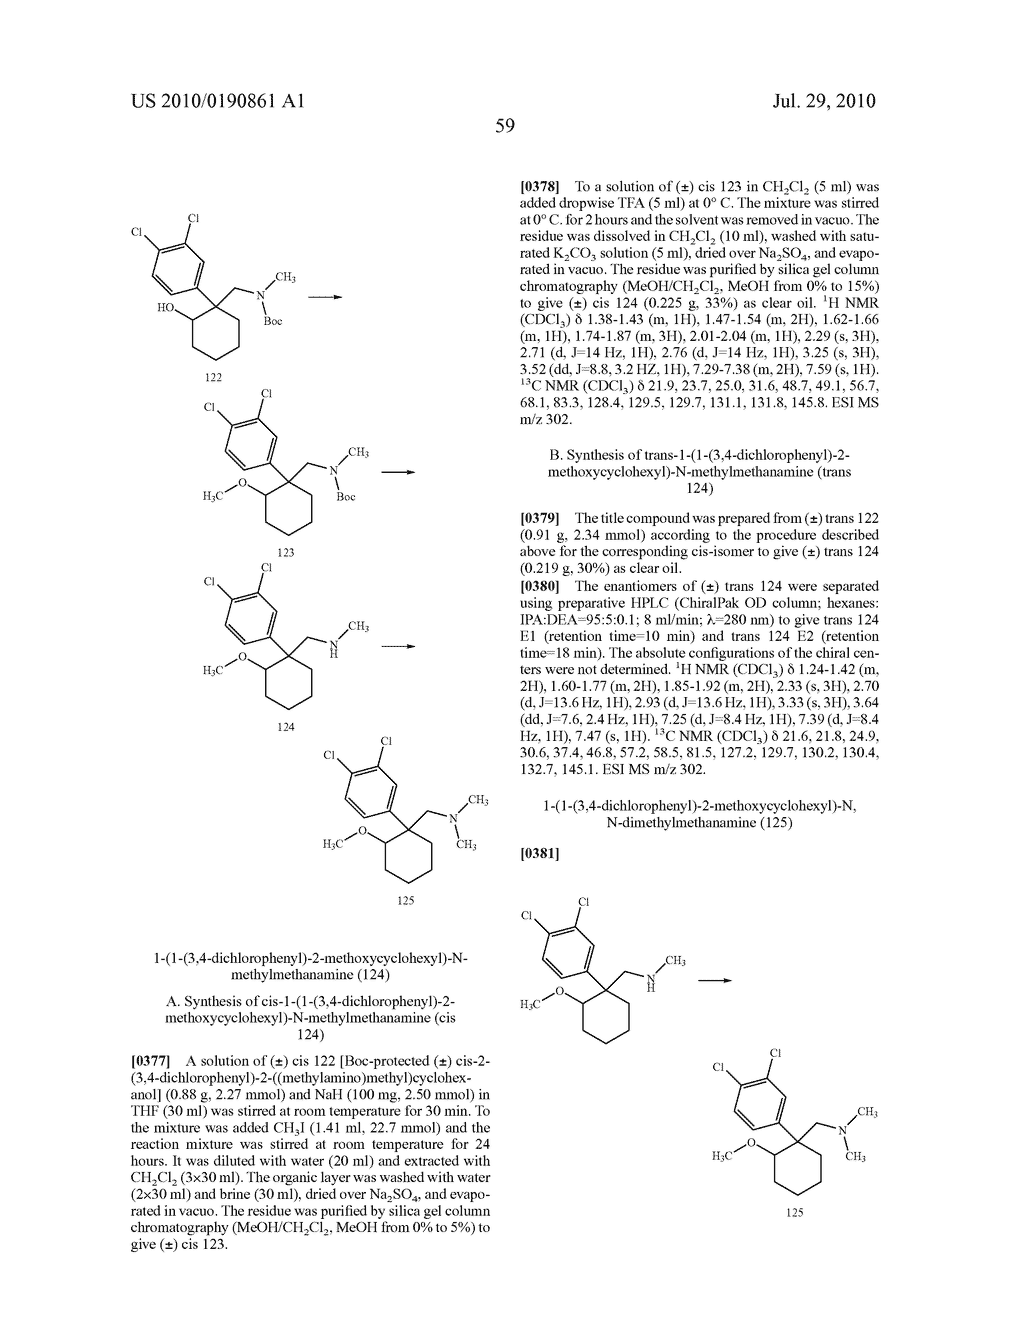 CYCLOALKYLAMINES AS MONOAMINE REUPTAKE INHIBITORS - diagram, schematic, and image 60